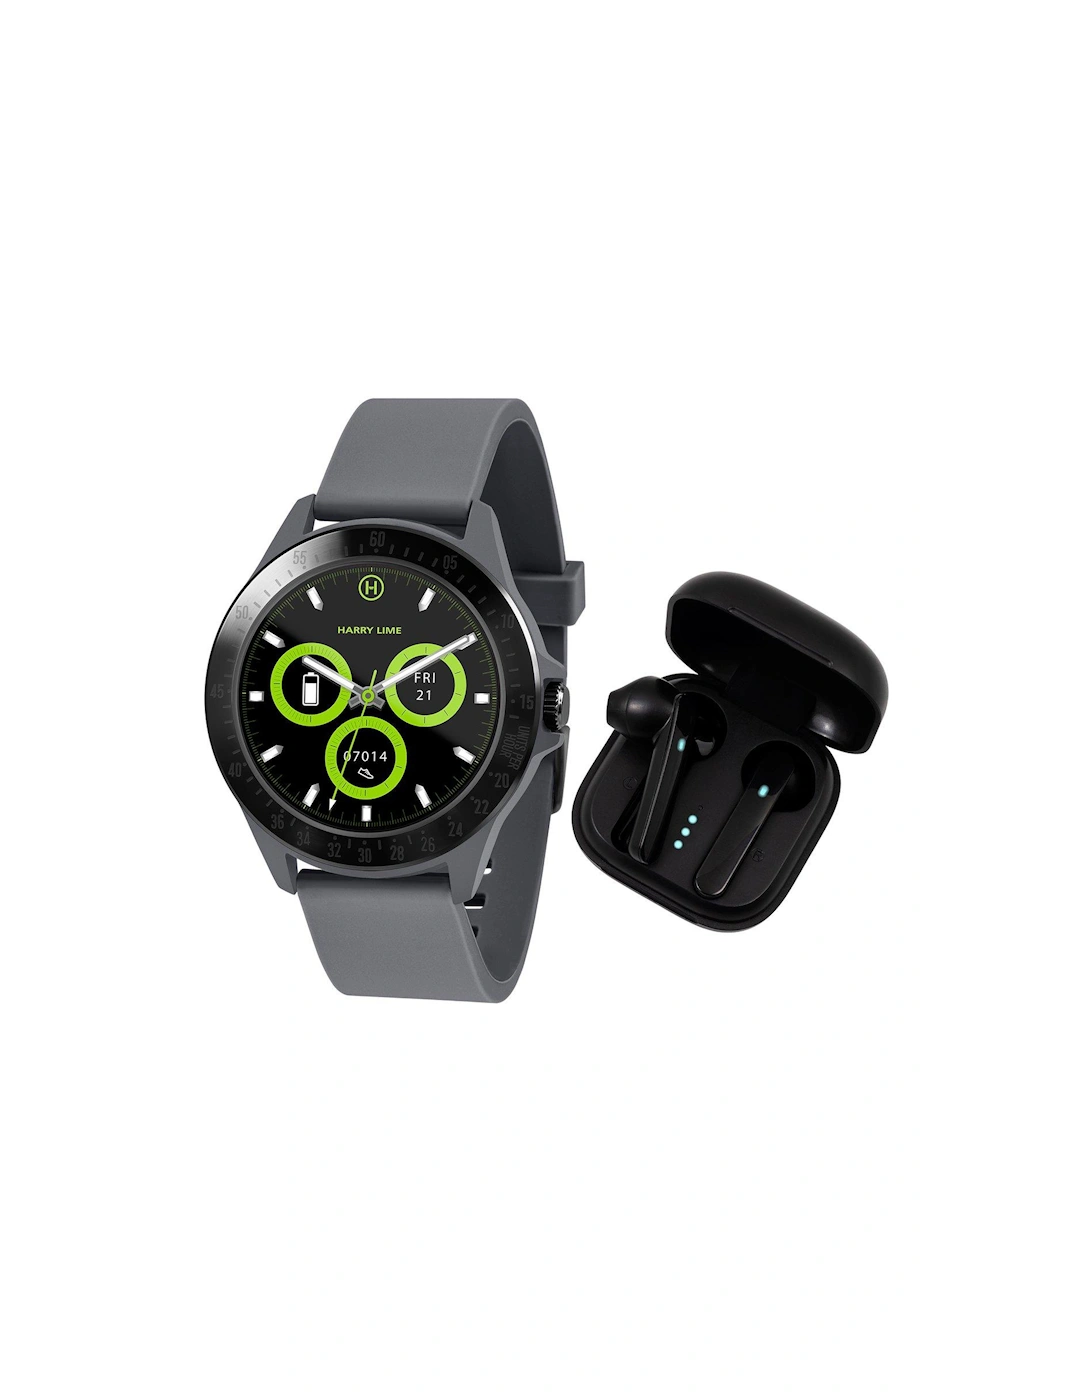 Fashion Smart Watch in Grey Featuring Black True Wireless Earbuds in Charging Case, 3 of 2